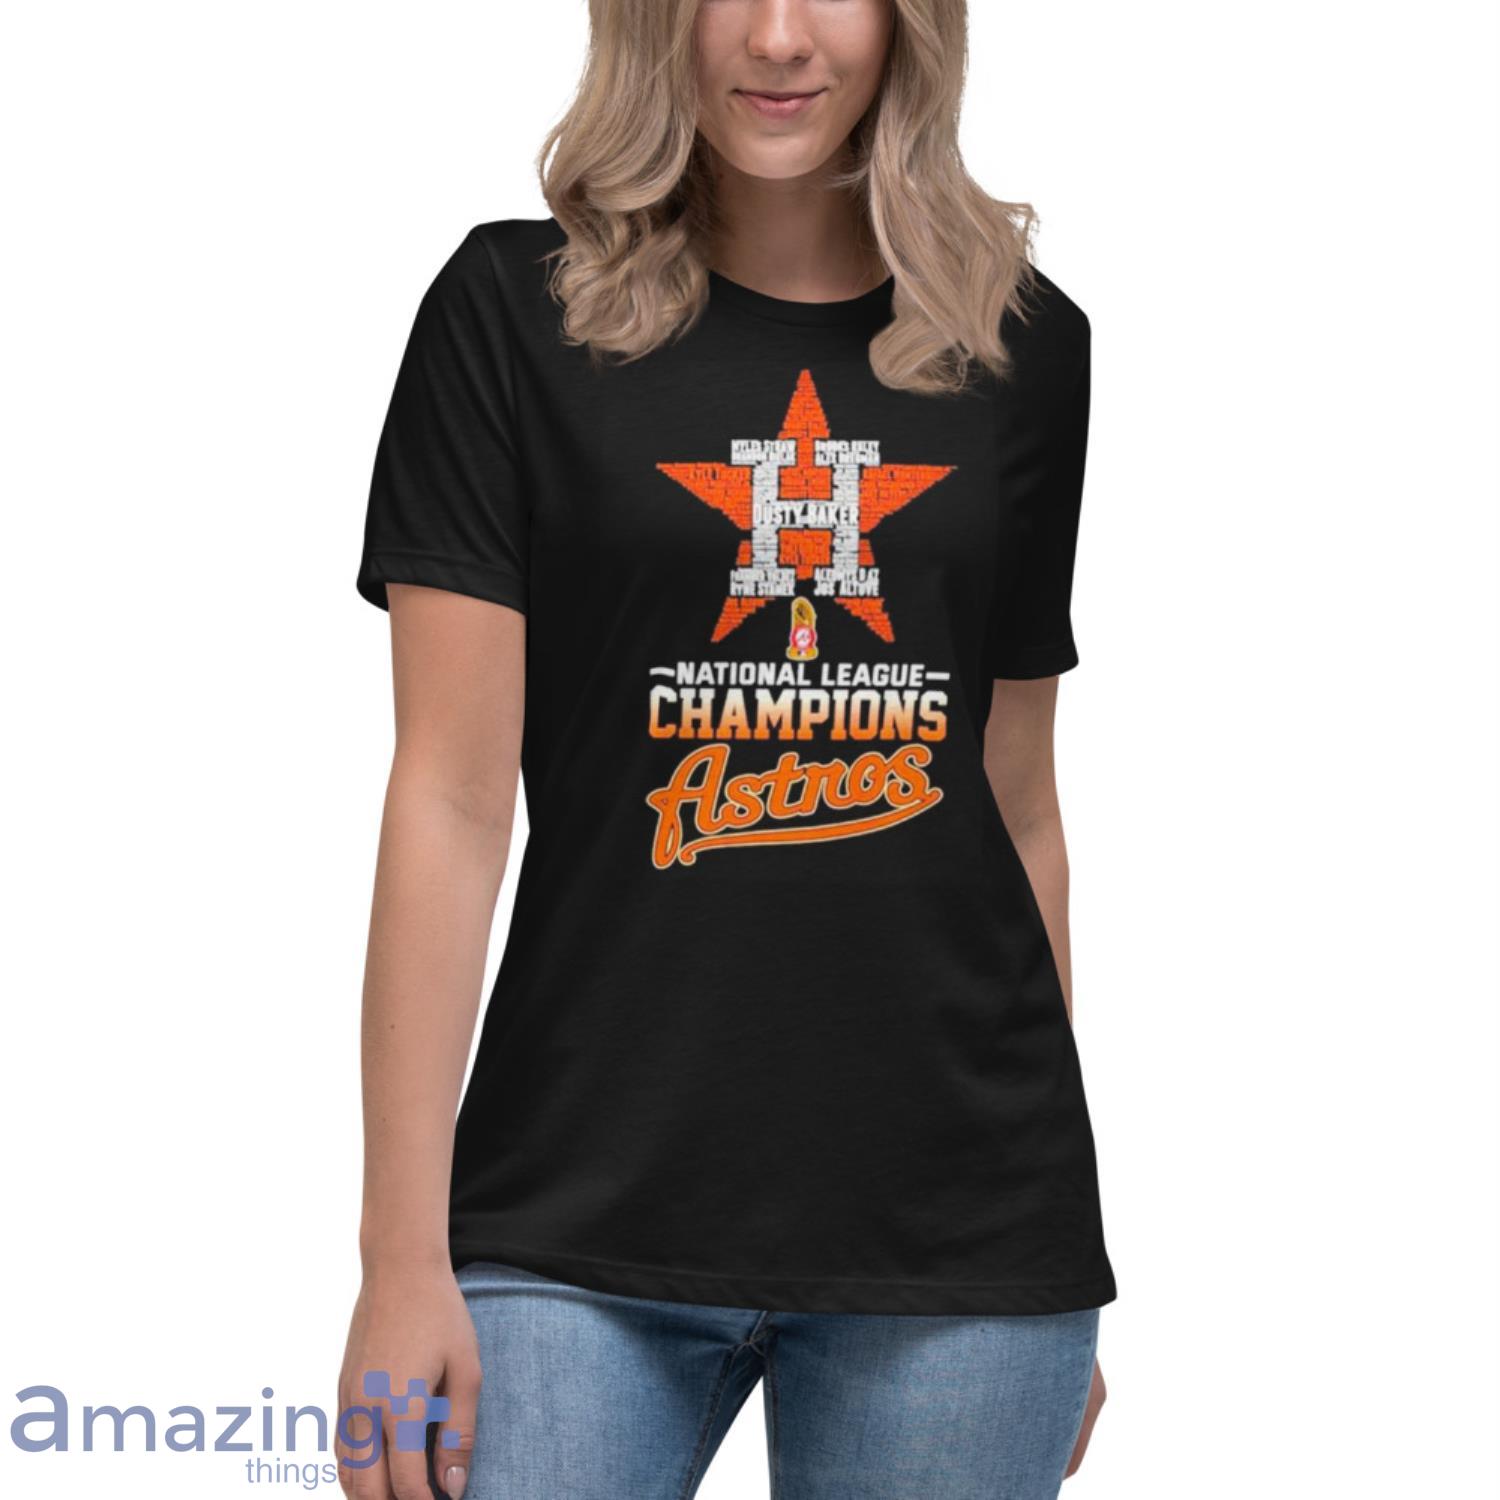 Houston astros baseball national league champions astros shirt